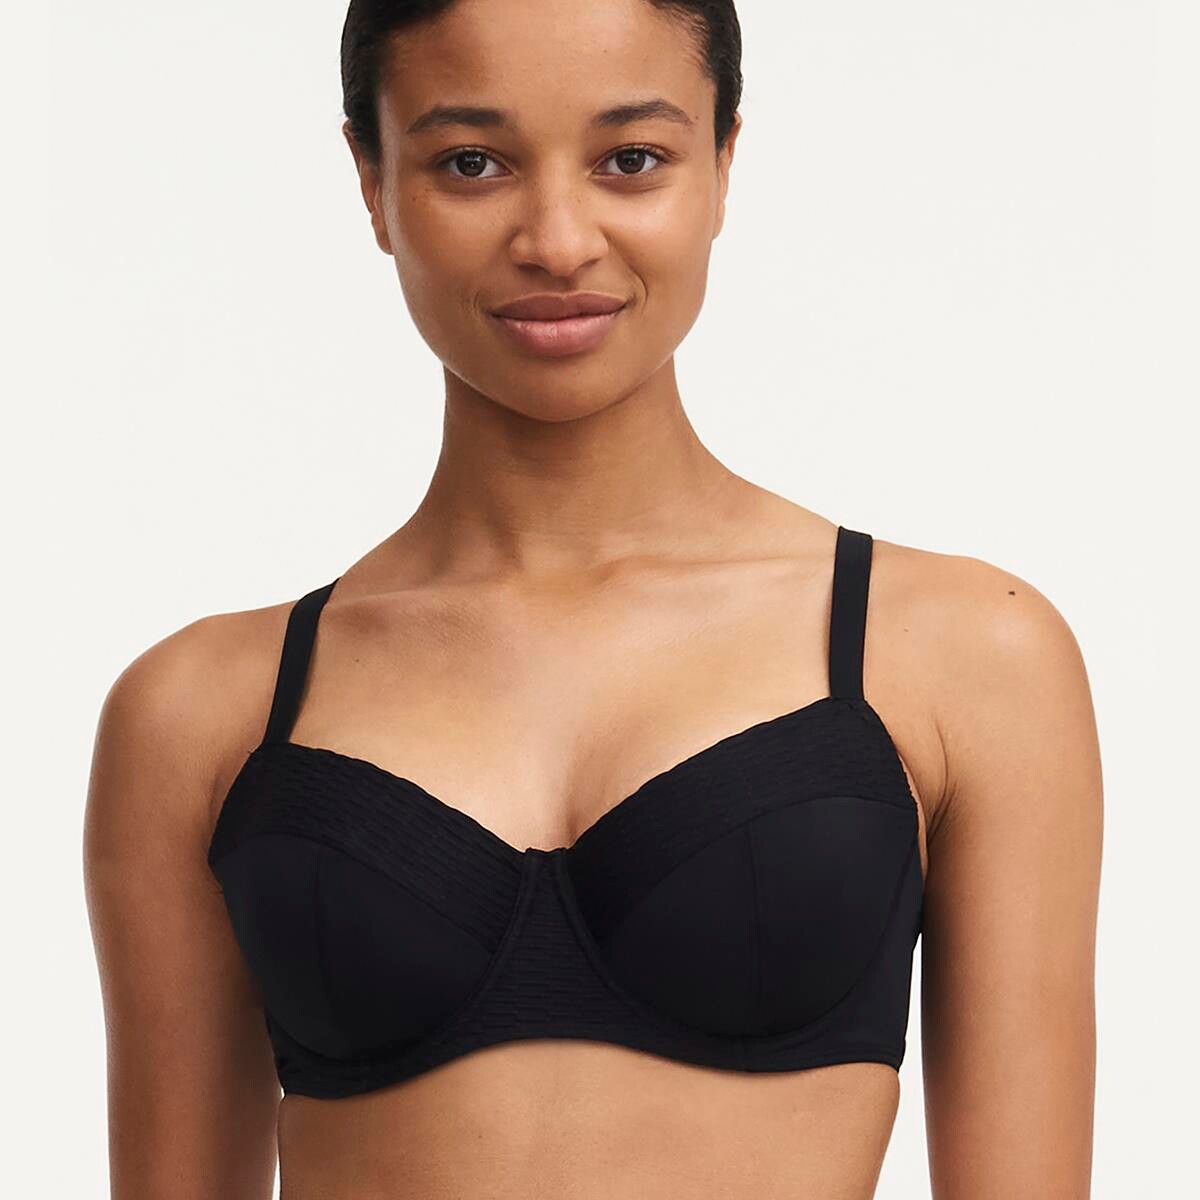 Femilet Bonaire Bikinitop, Farve: Sort, Størrelse: 75D, Dame